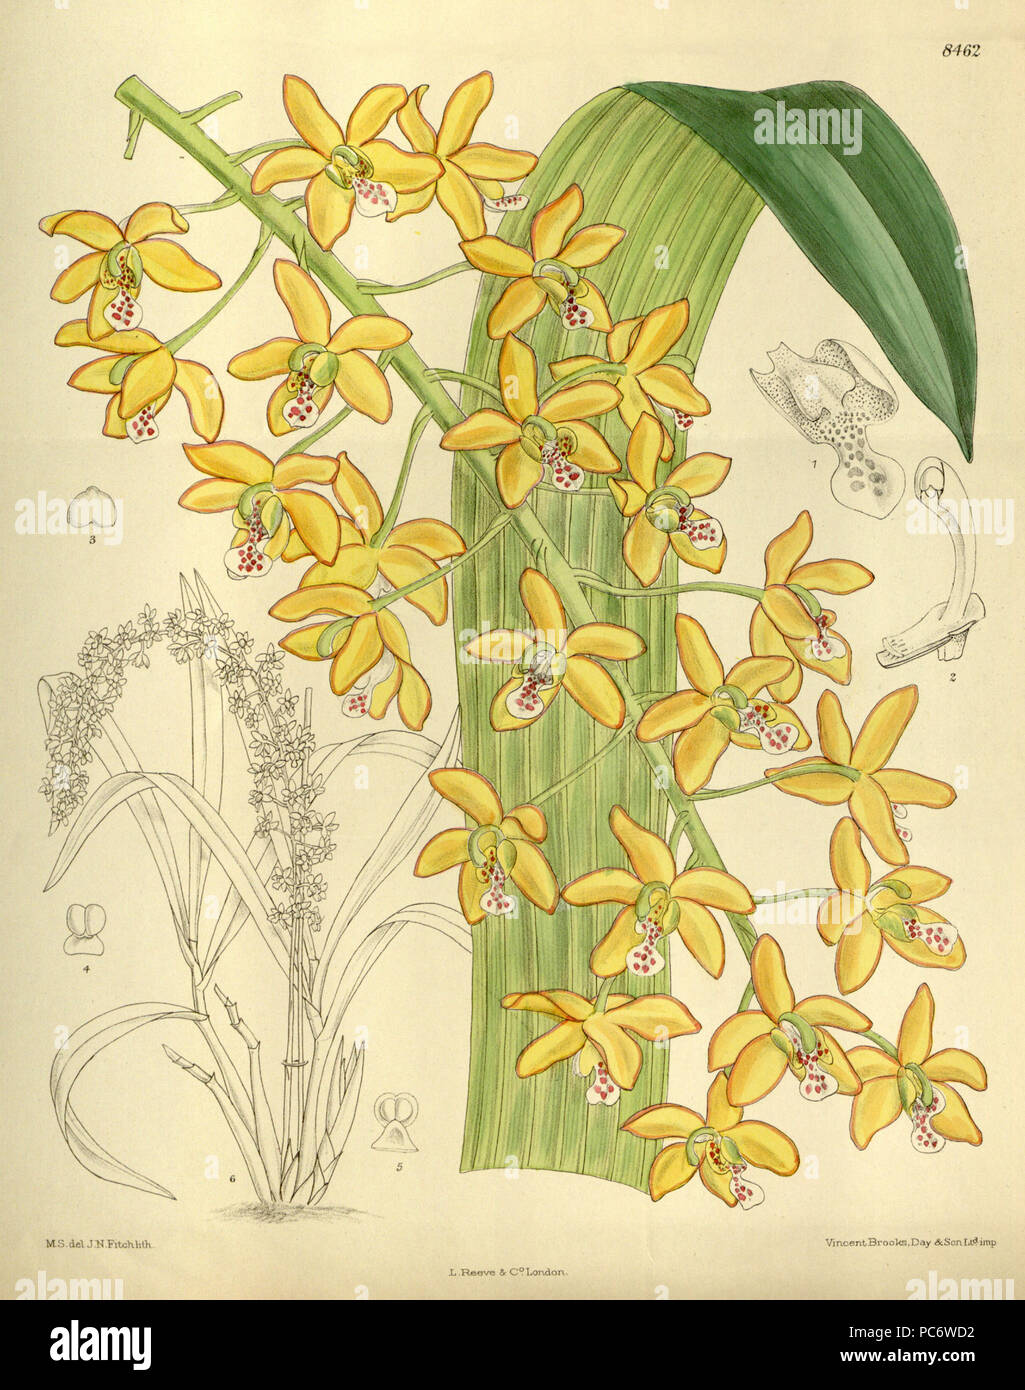 193 Eriopsis sceptrum (as Eriopsis helenae) - Curtis' 138 (Ser. 4 no. 8) pl. 8462 (1912) Stock Photo